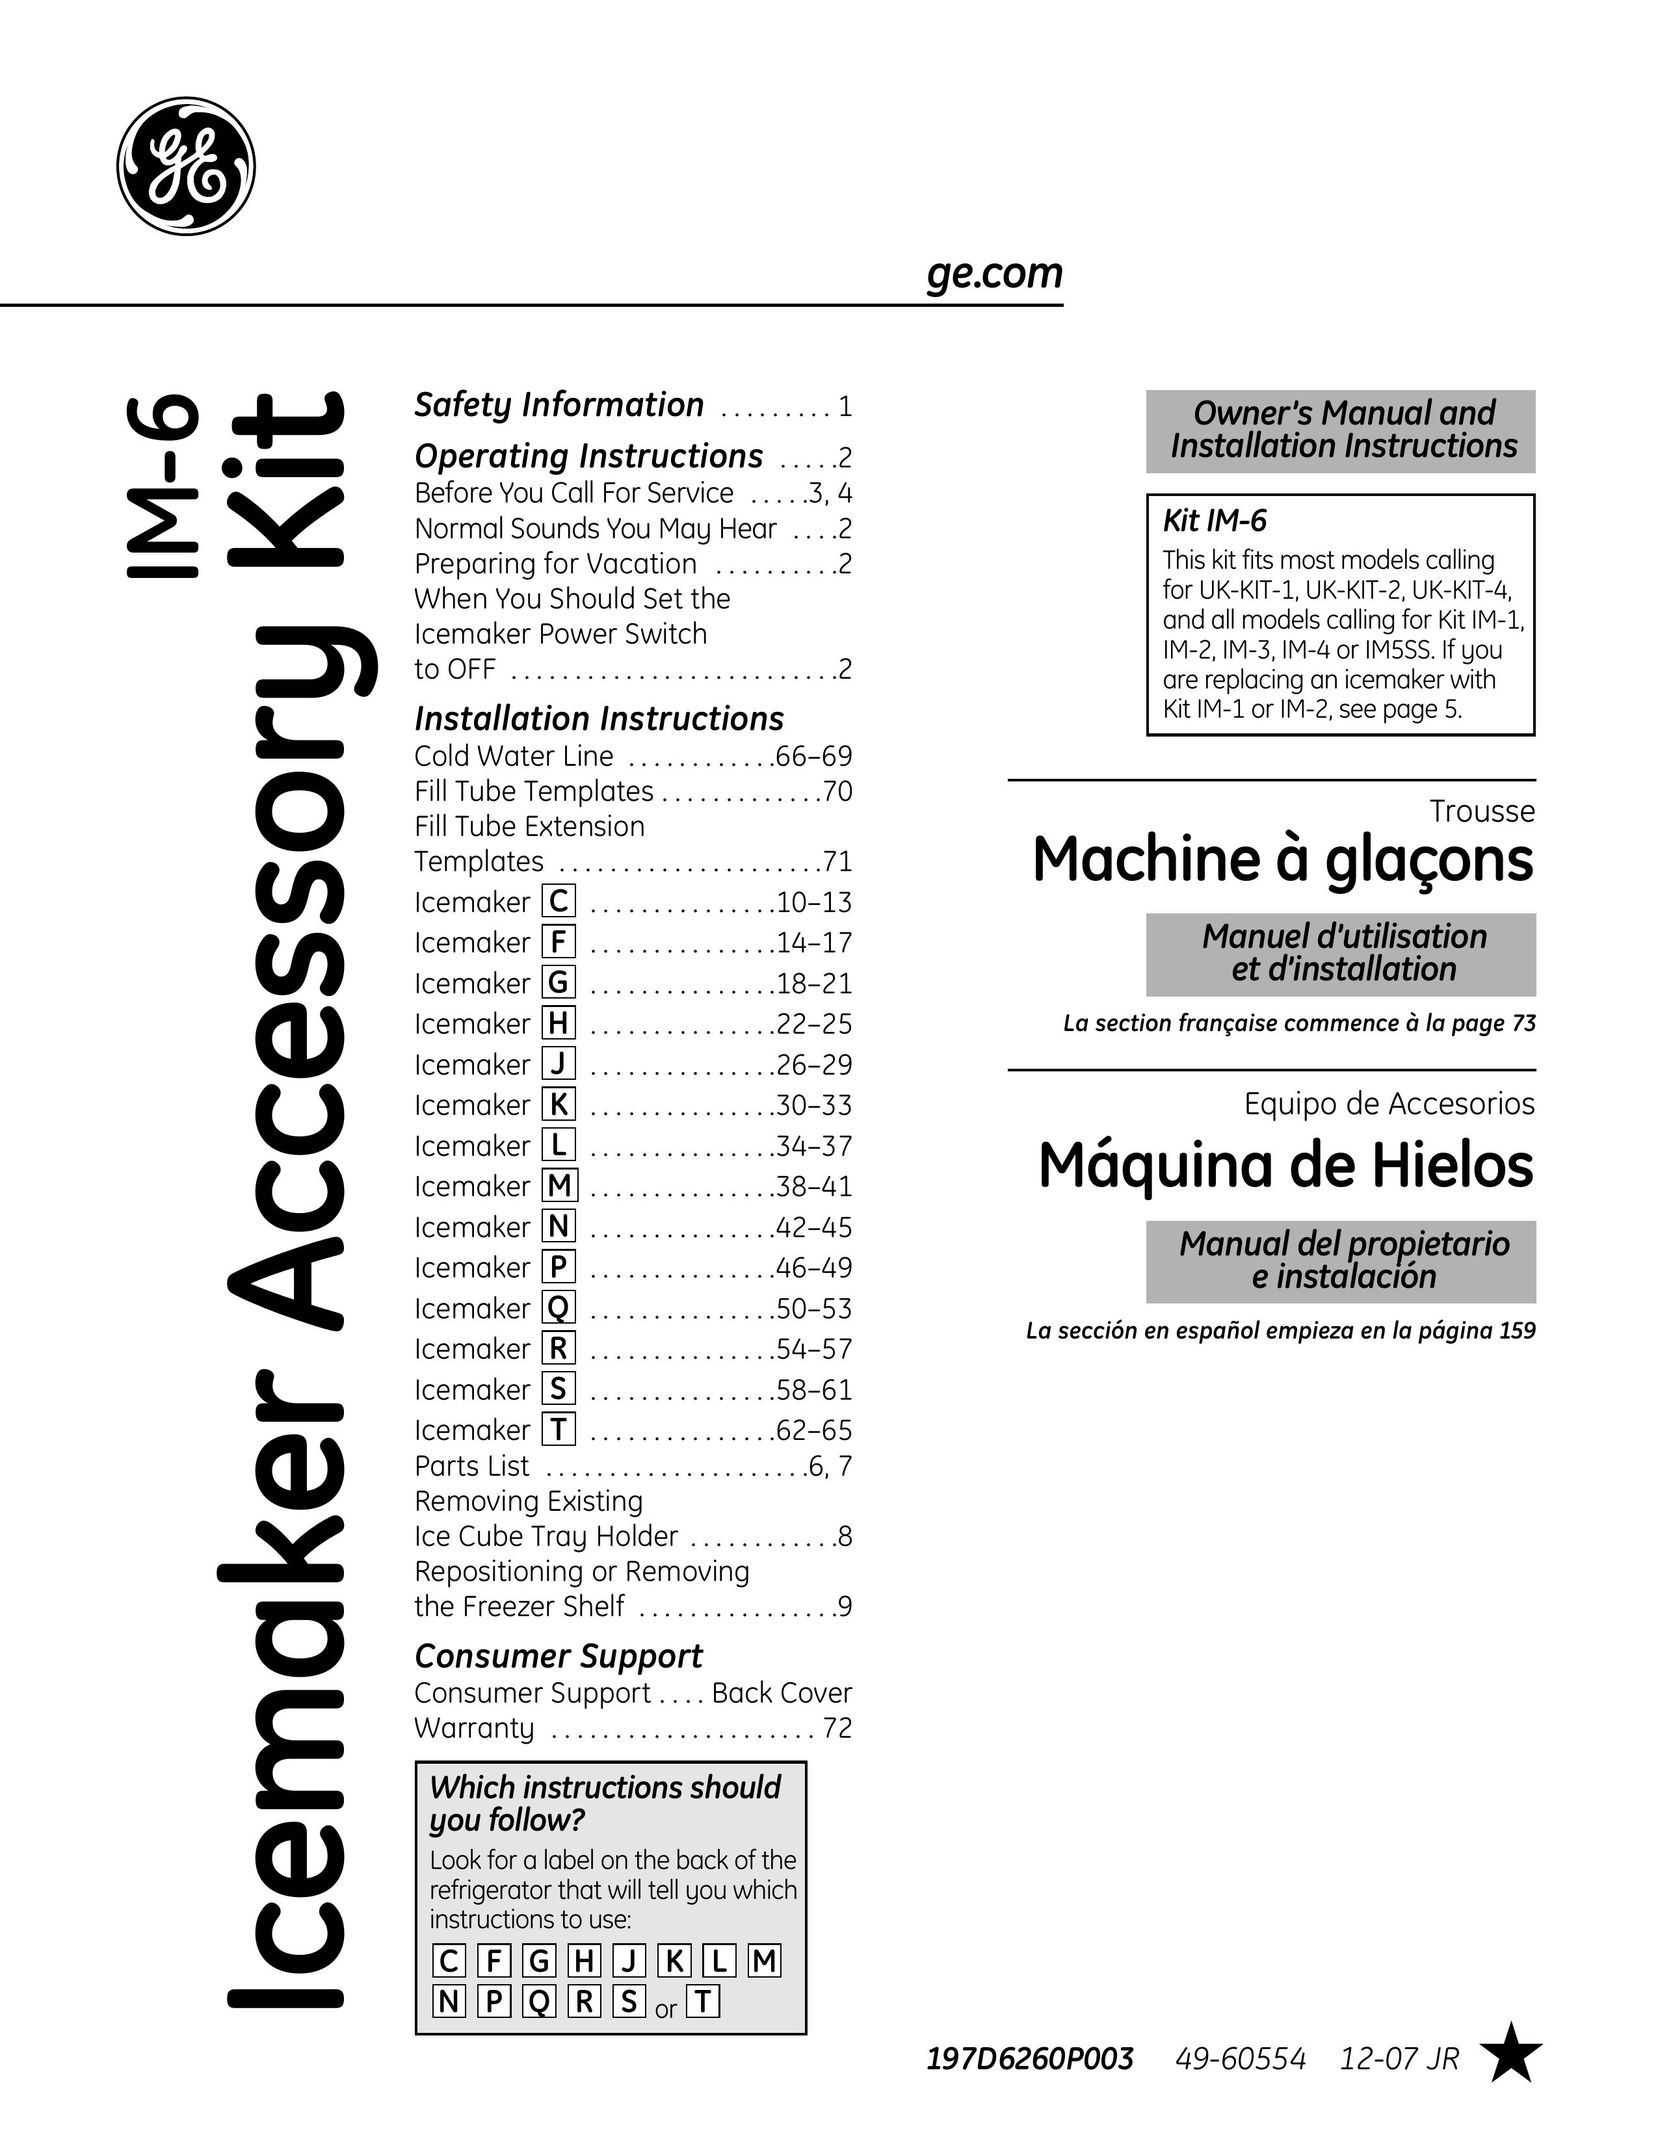 GE IM-6 Ice Maker User Manual